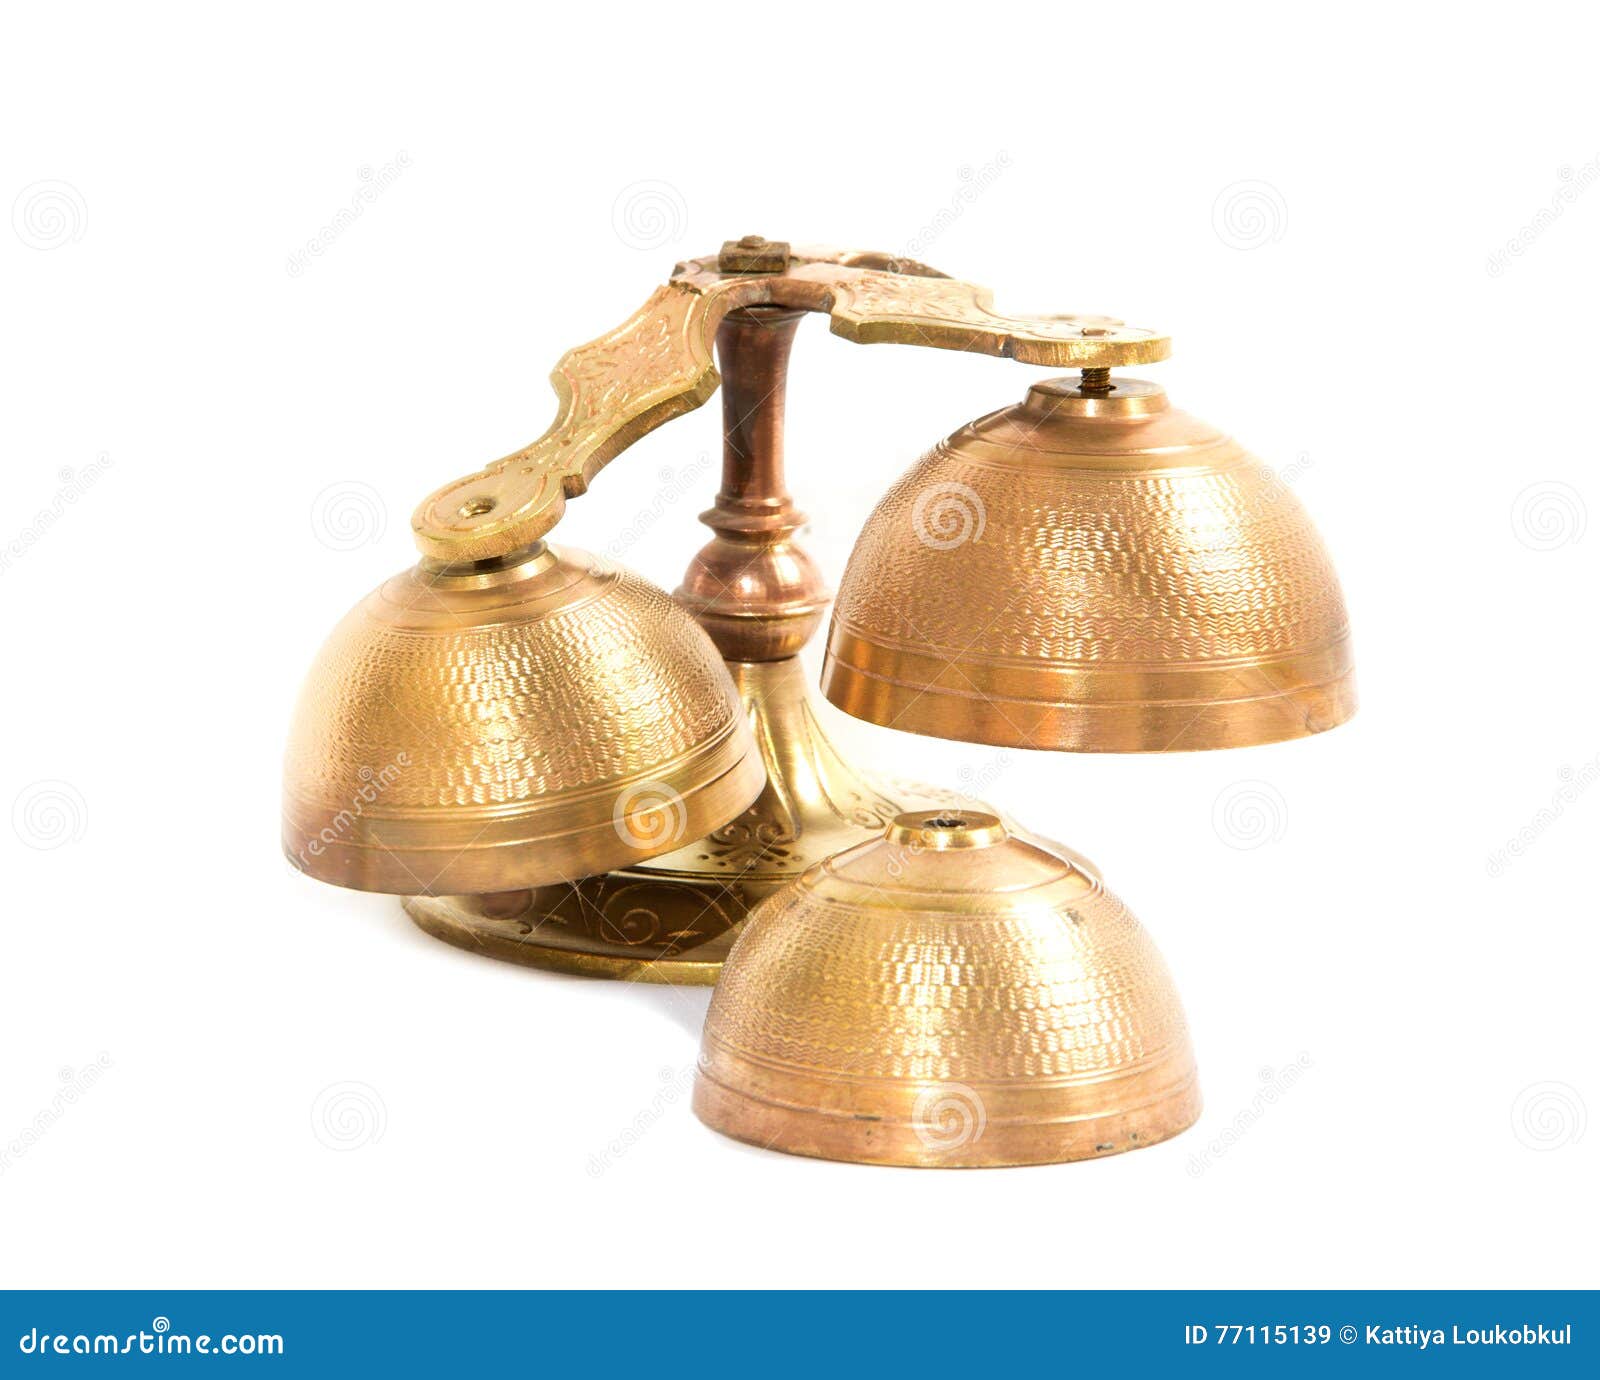 set of gold handbells on white background